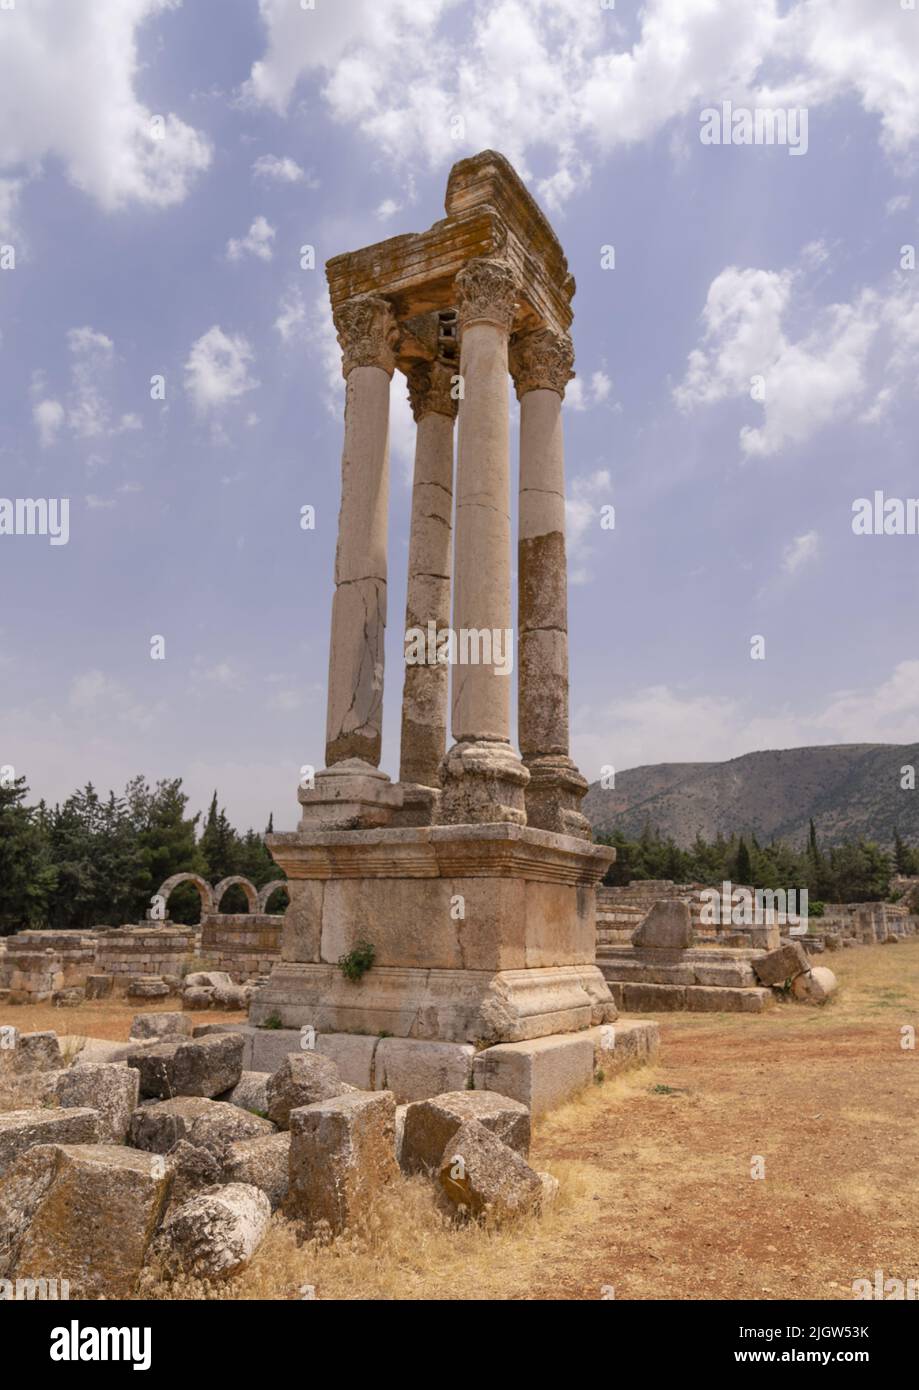 The tetrapylon of the Umayyad city, Beqaa Governorate, Anjar, Lebanon Stock Photo